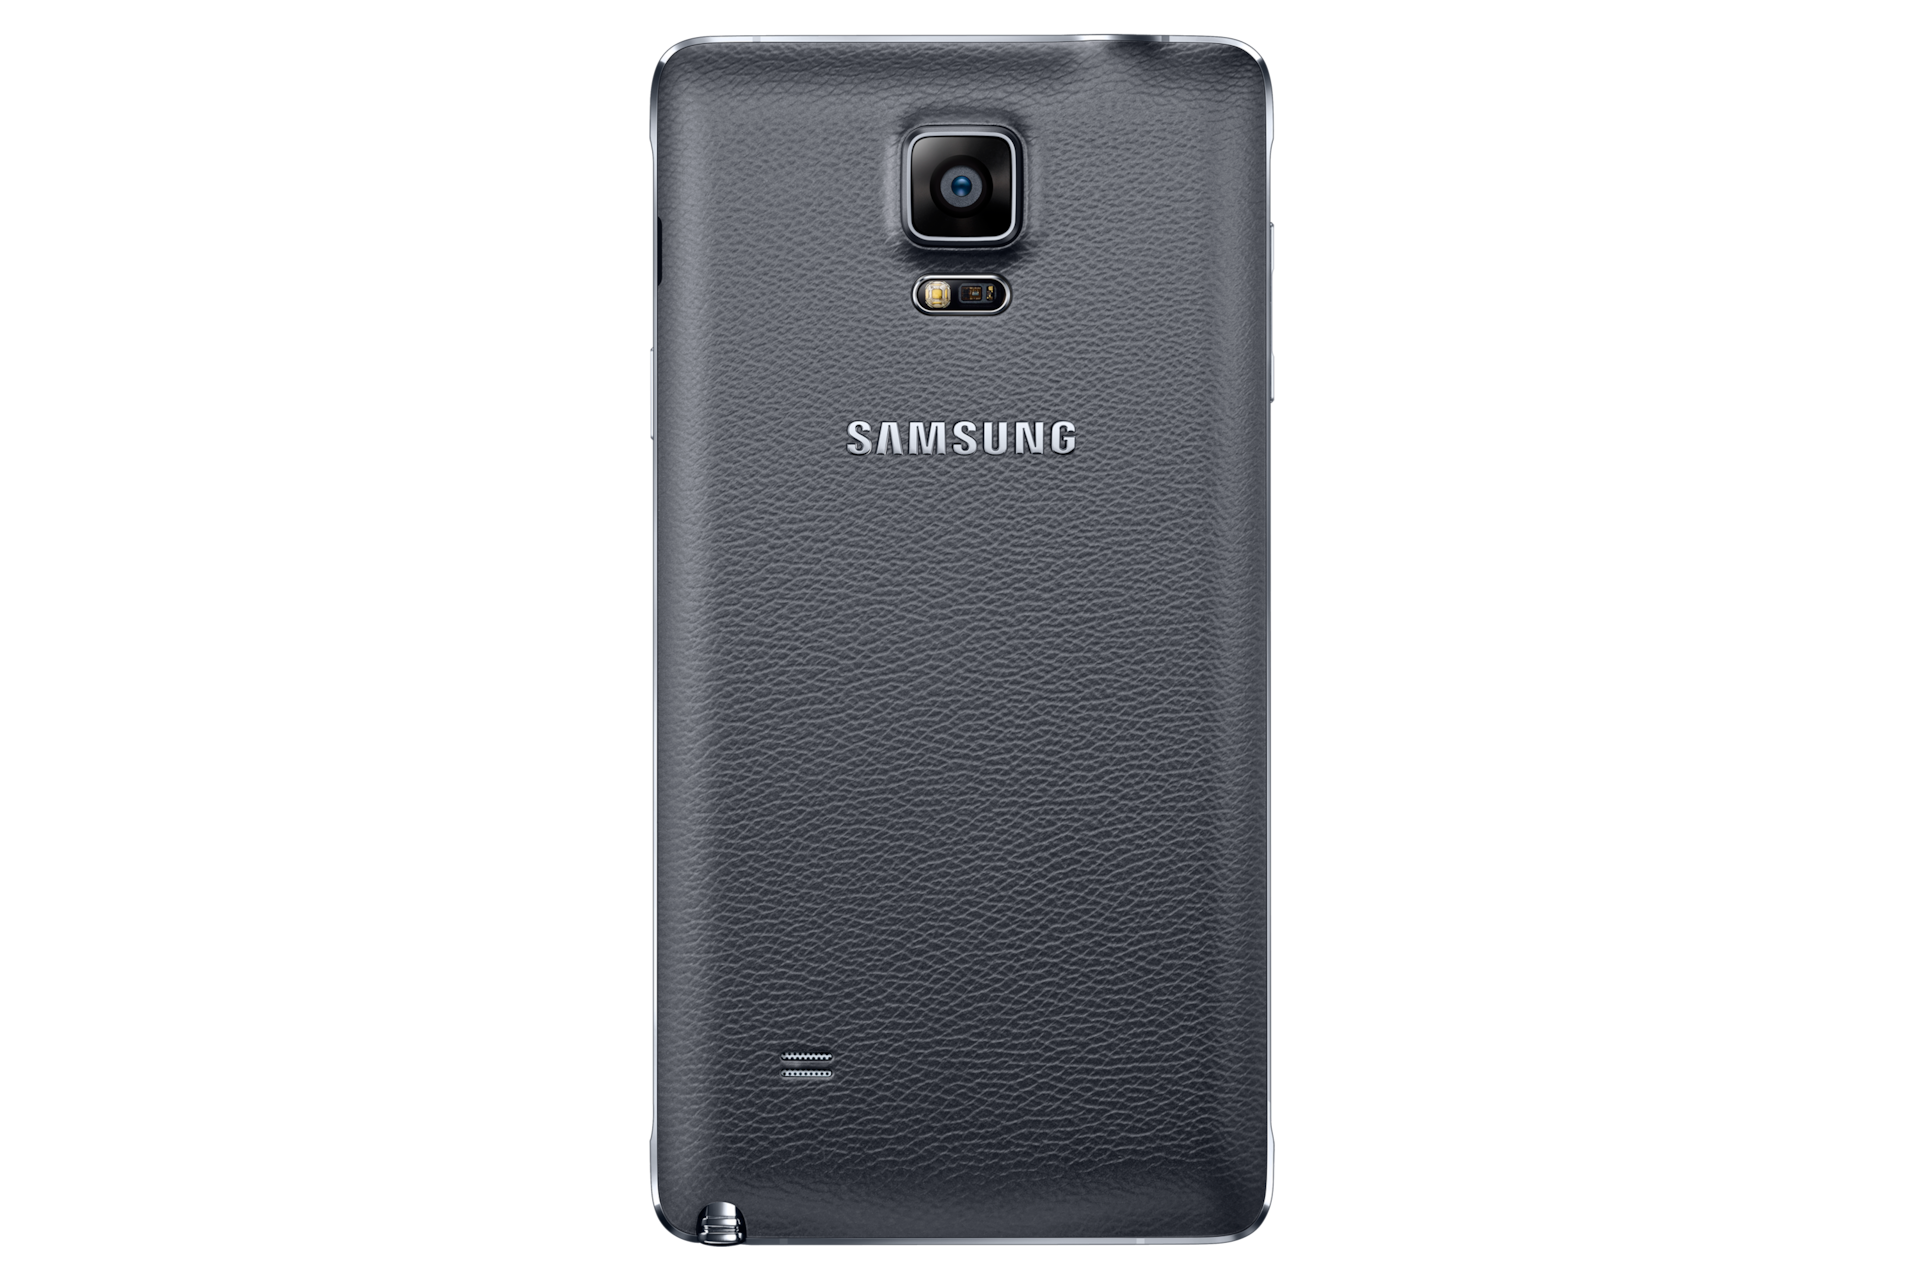 Samsung Galaxy Note 4 review - Tech Advisor